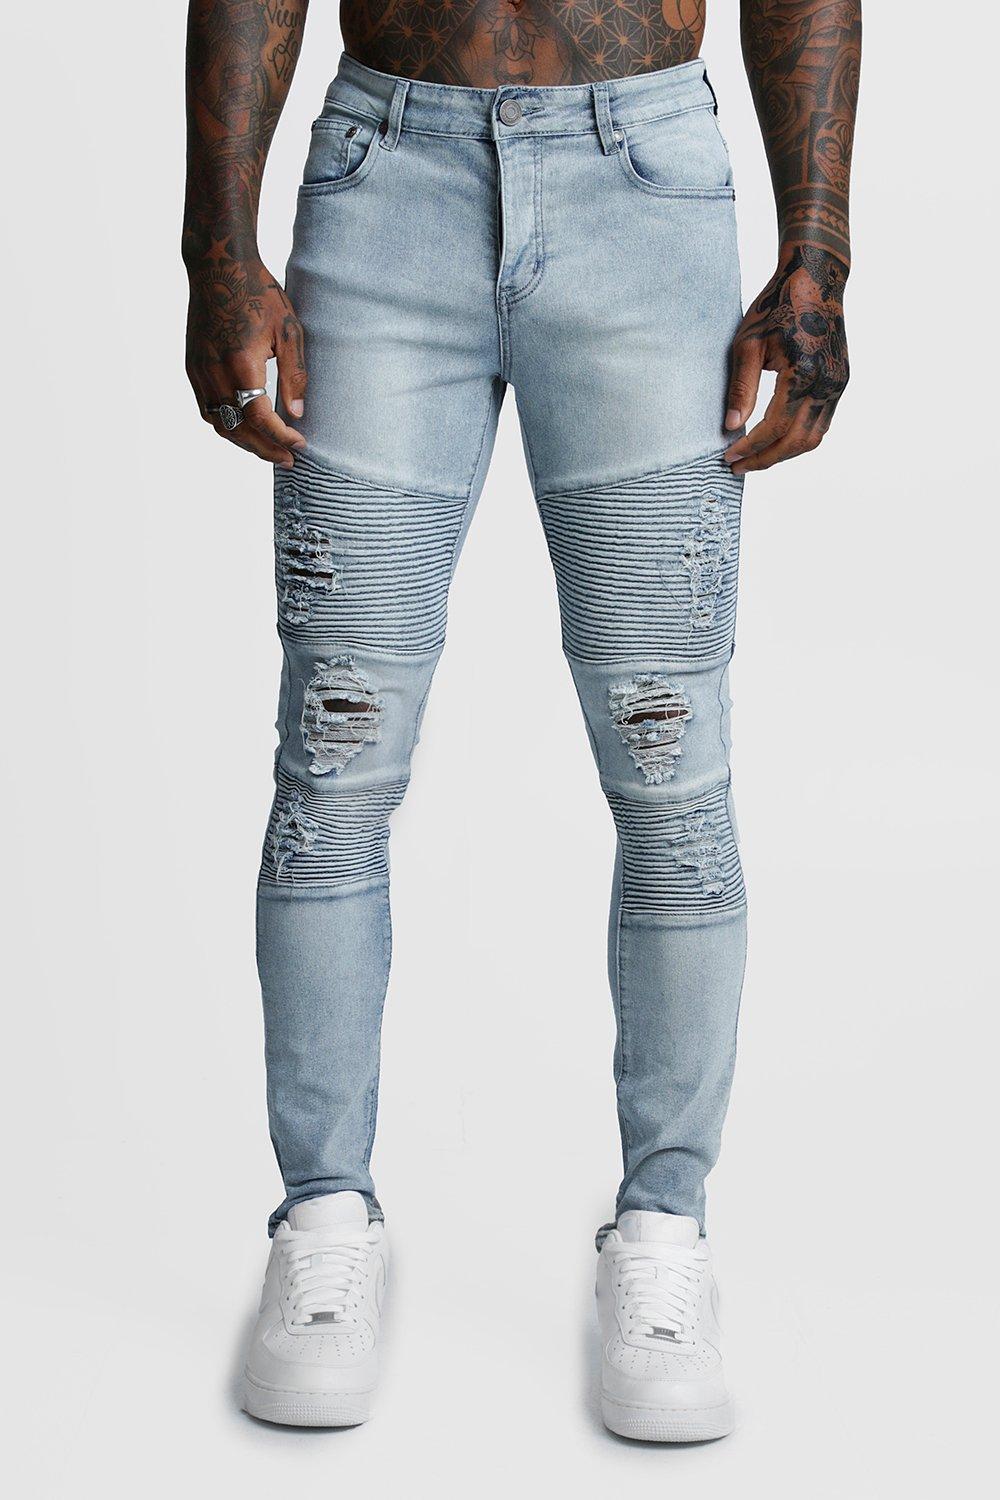 designer bootcut jeans womens